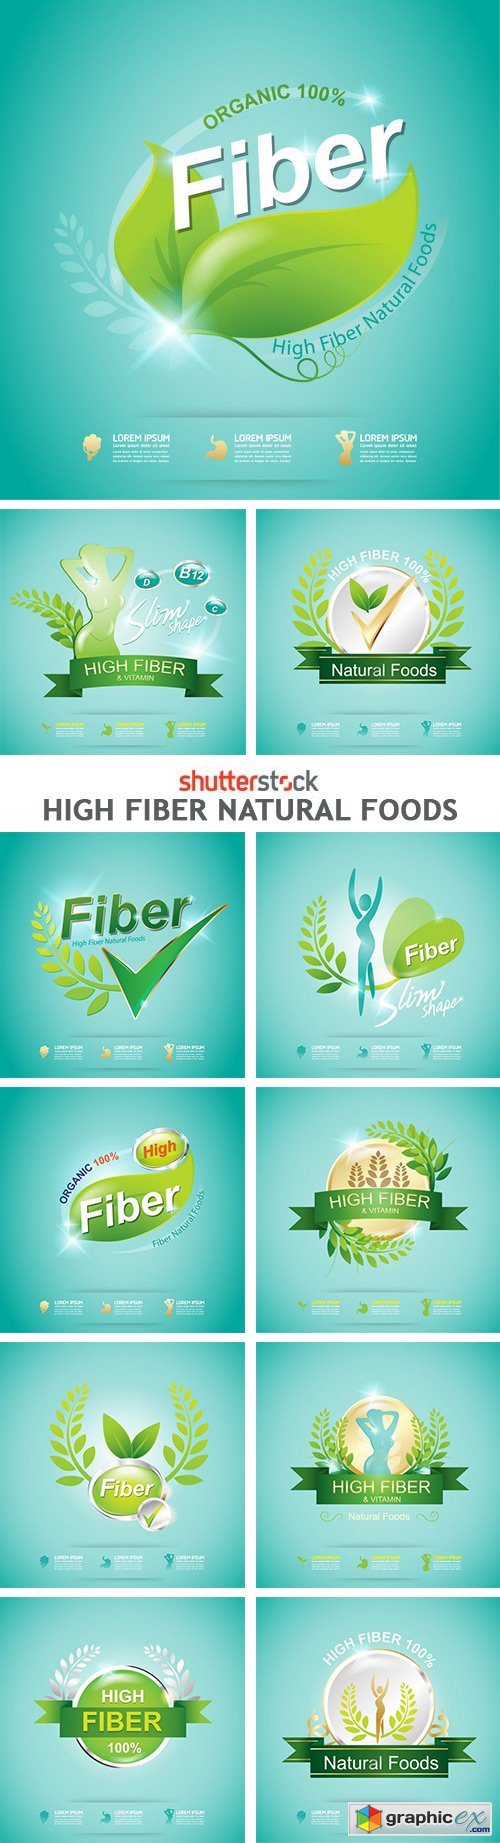 High Fiber Natural Foods - 25xEPS